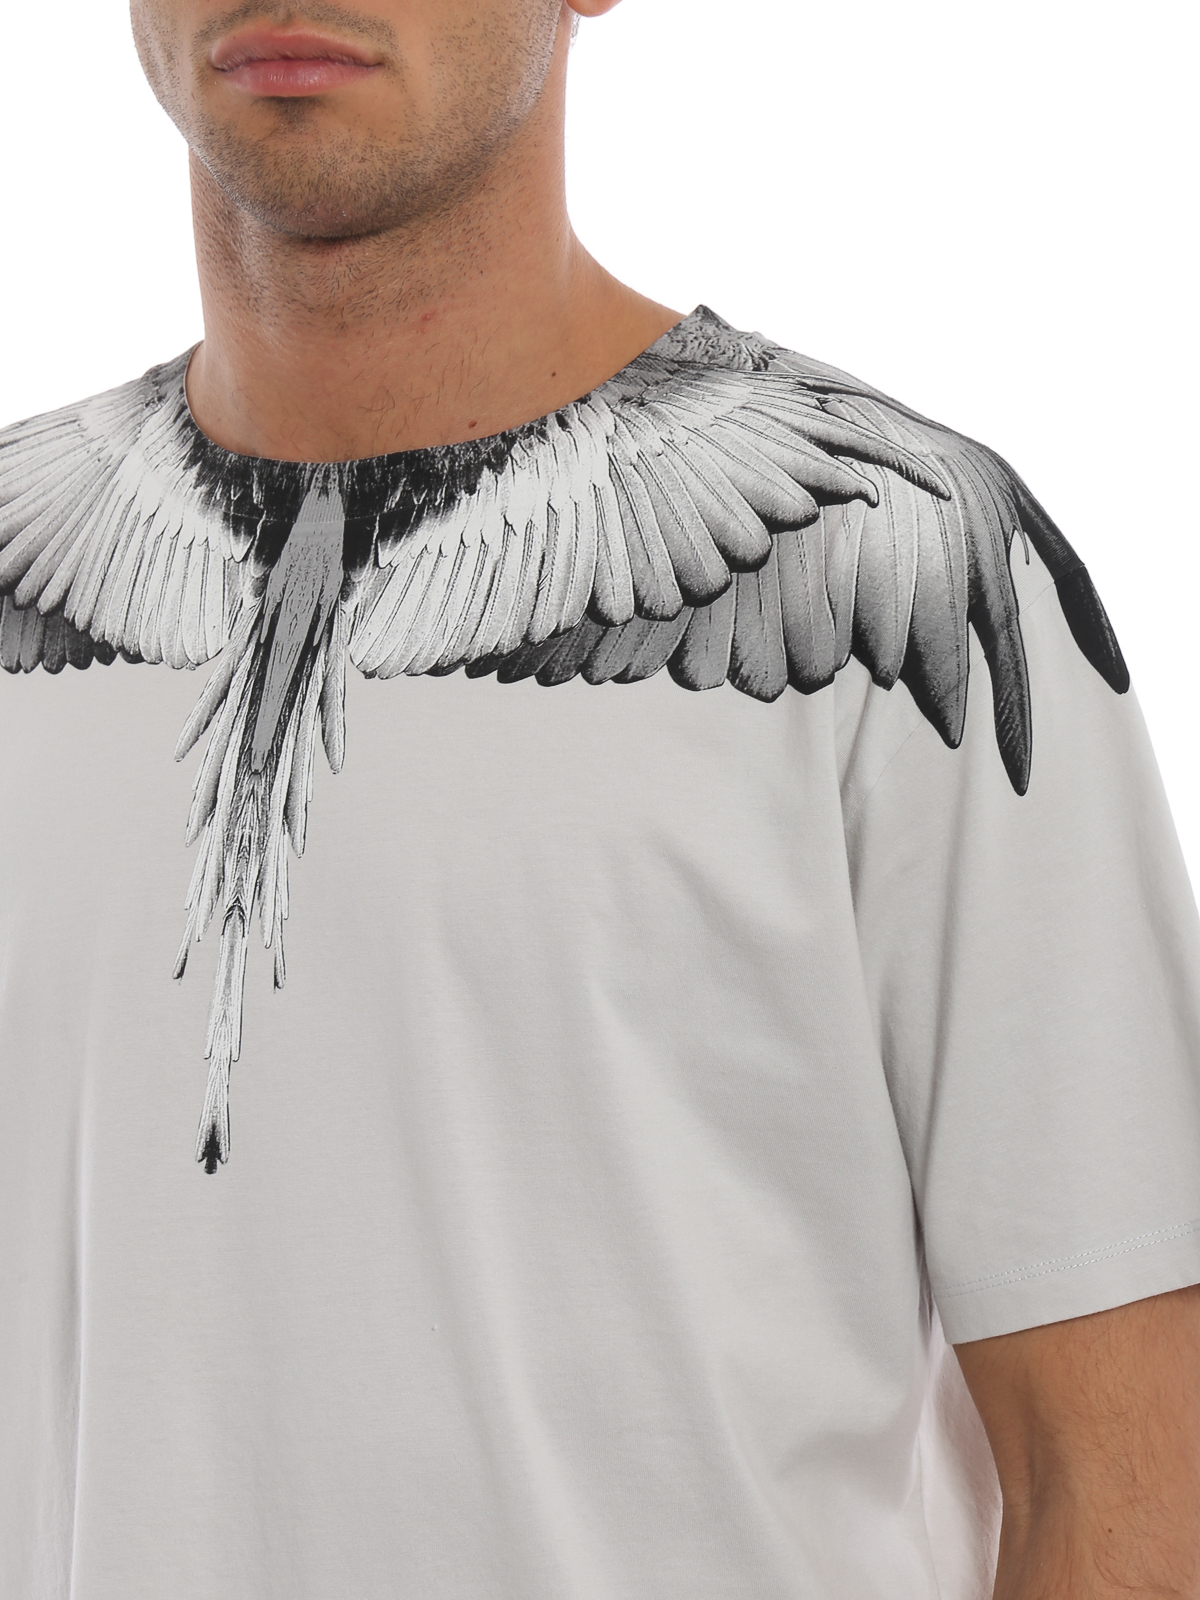 glide Bedst Skrøbelig T-shirts Marcelo Burlon - Wings pearl grey cotton T-shirt -  CMAA018E180010010606